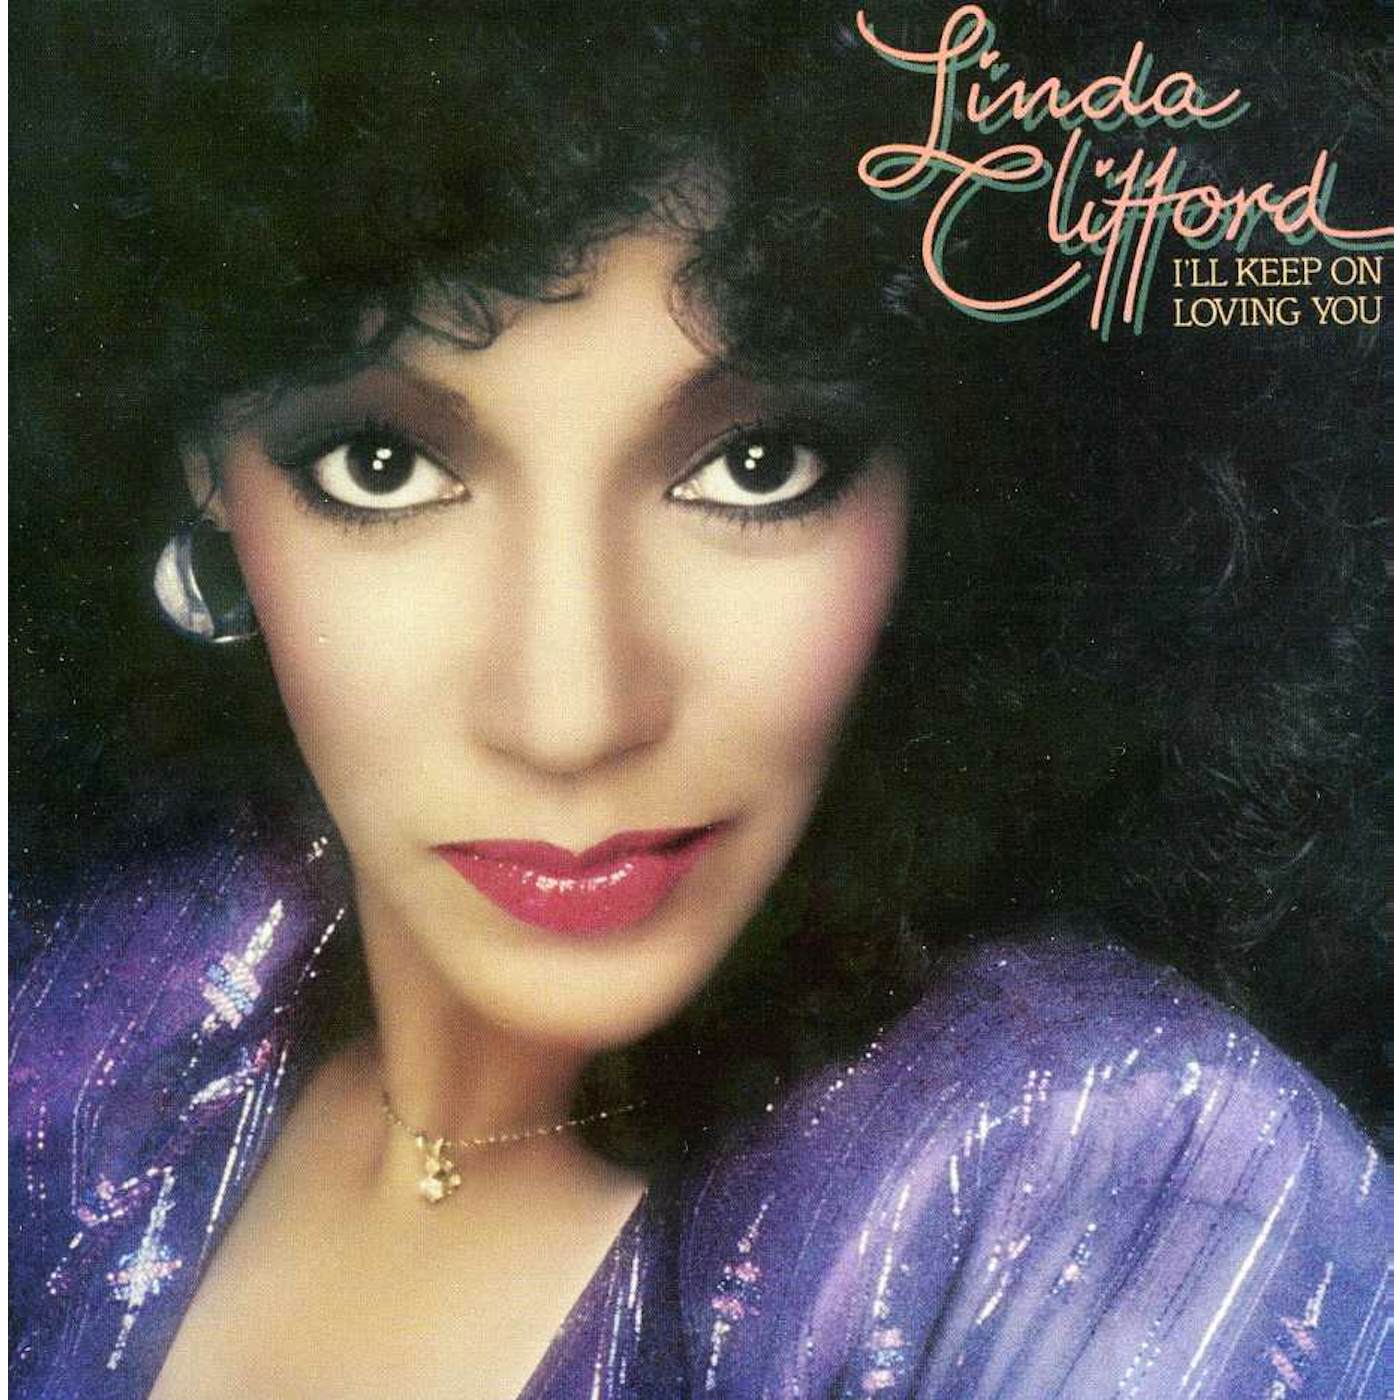 Linda Clifford I'LL KEEP ON LOVING YOU CD